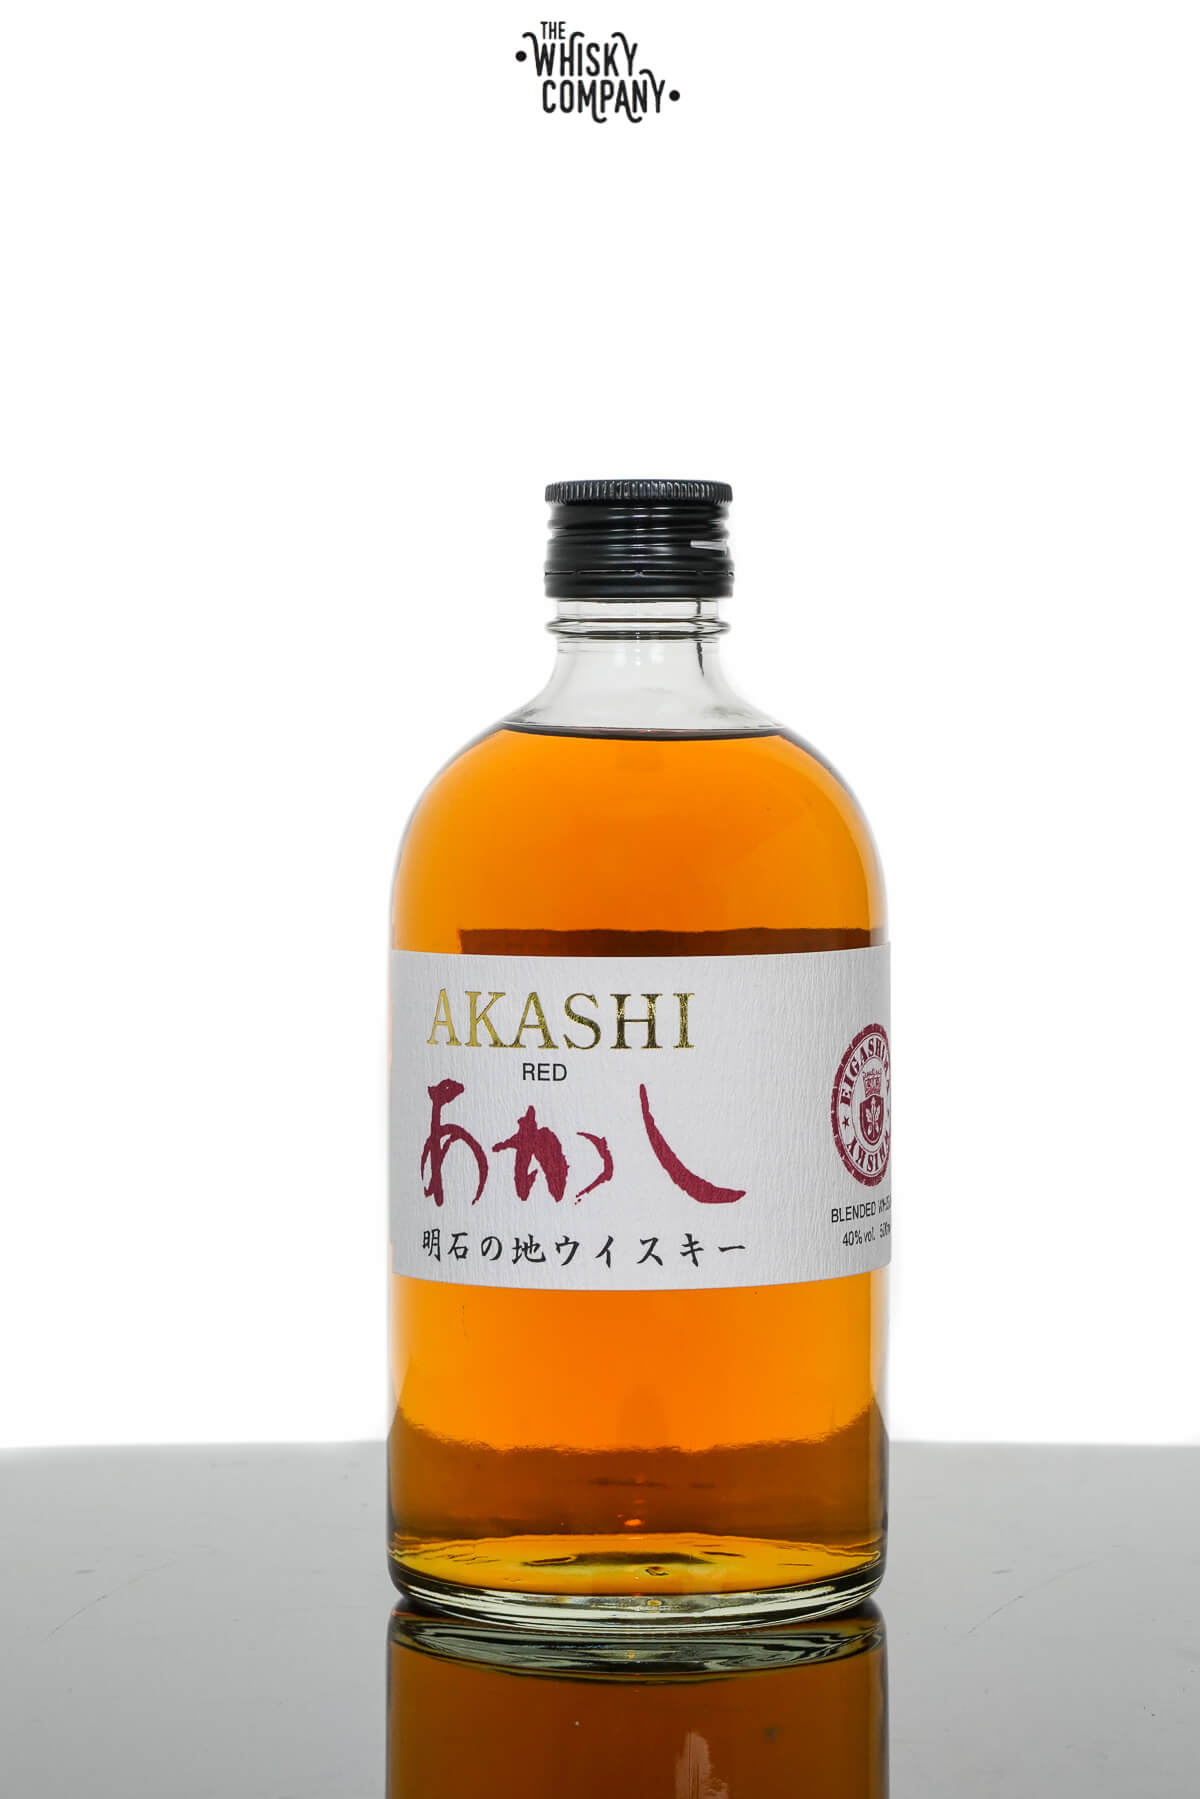 Buy Akashi 5 Years Old Single Malt Whisky Sake Cask Finish Online